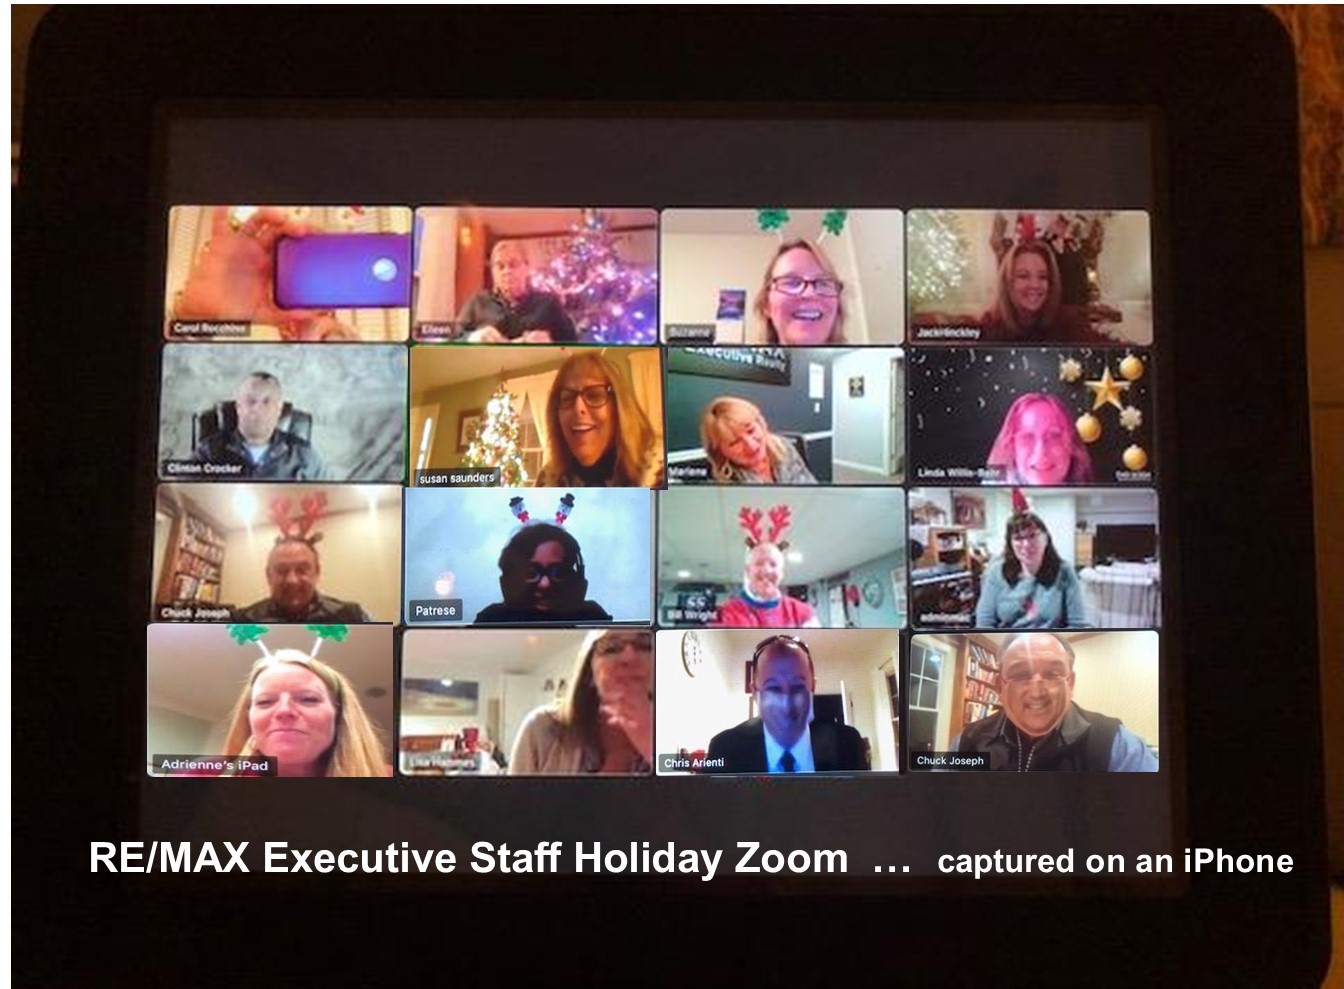 REMAX Executive Holiday Zoom (2).jpg